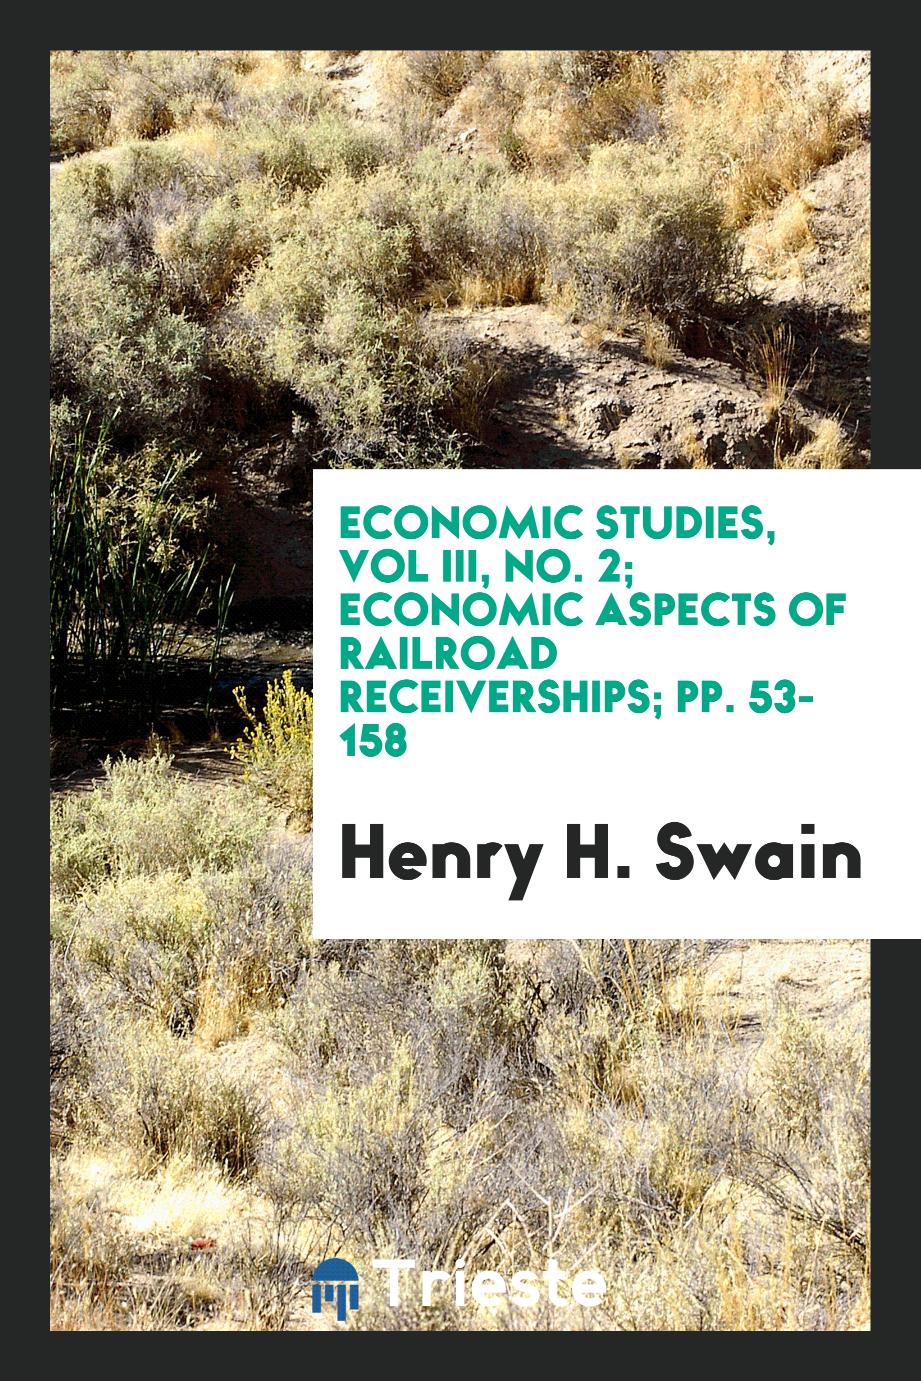 Economic Studies, Vol III, No. 2; Economic Aspects of Railroad Receiverships; pp. 53-158